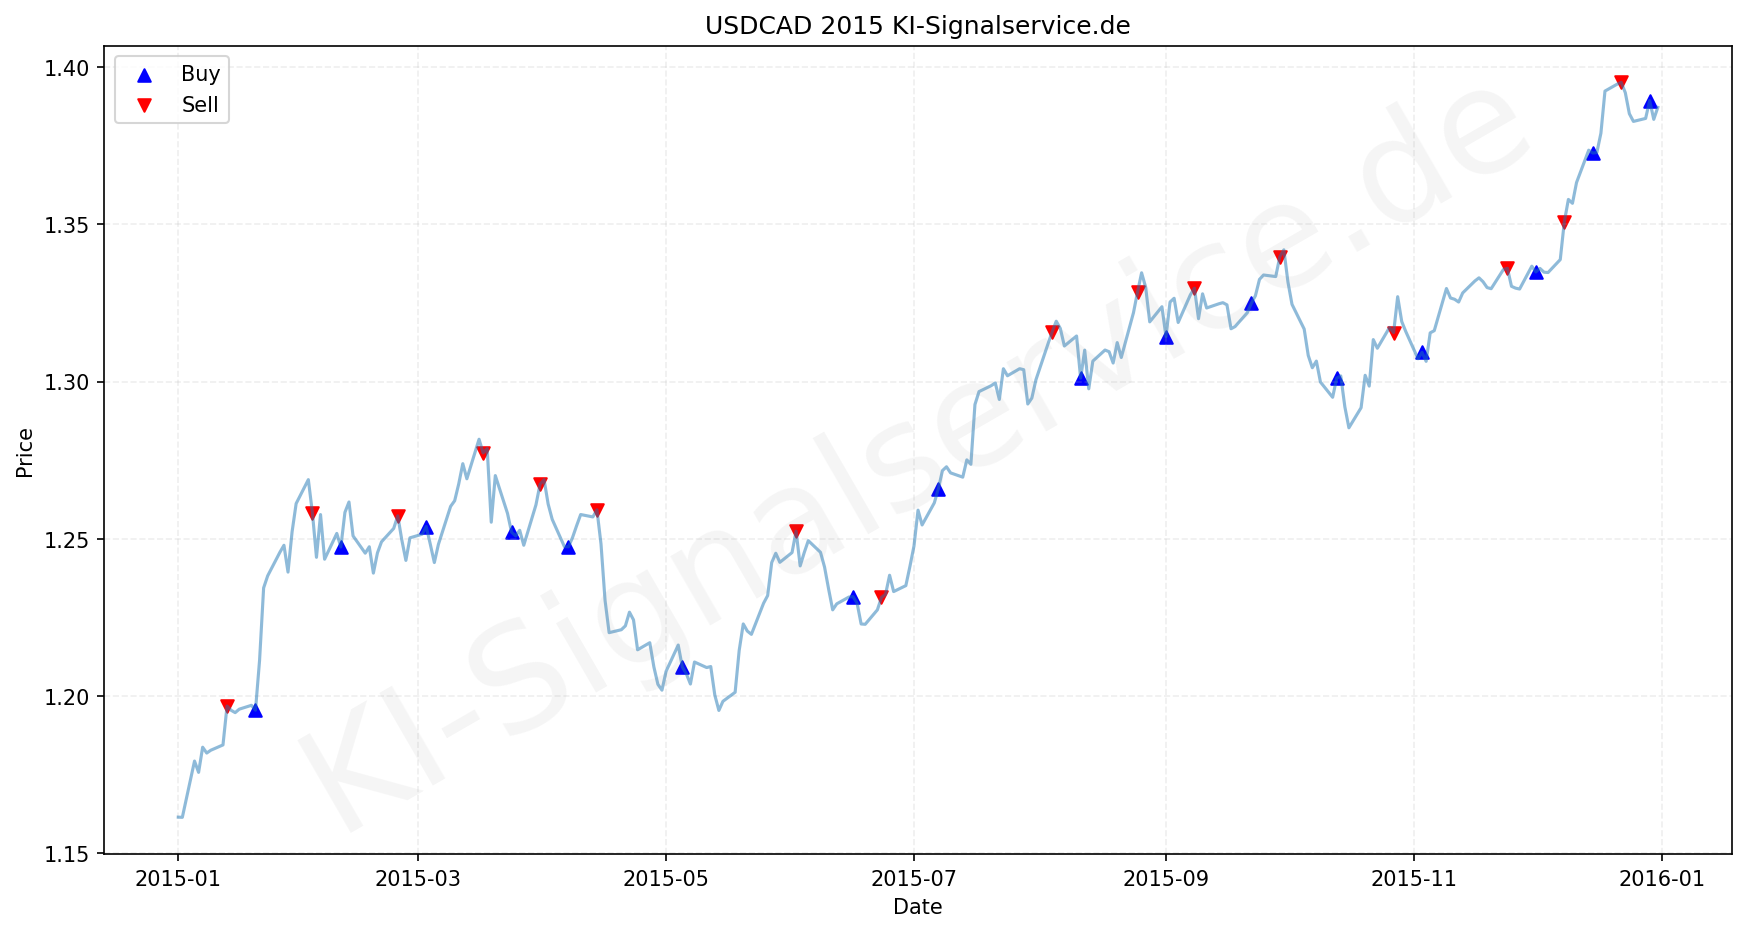 USDCAD Chart - KI Tradingsignale 2015